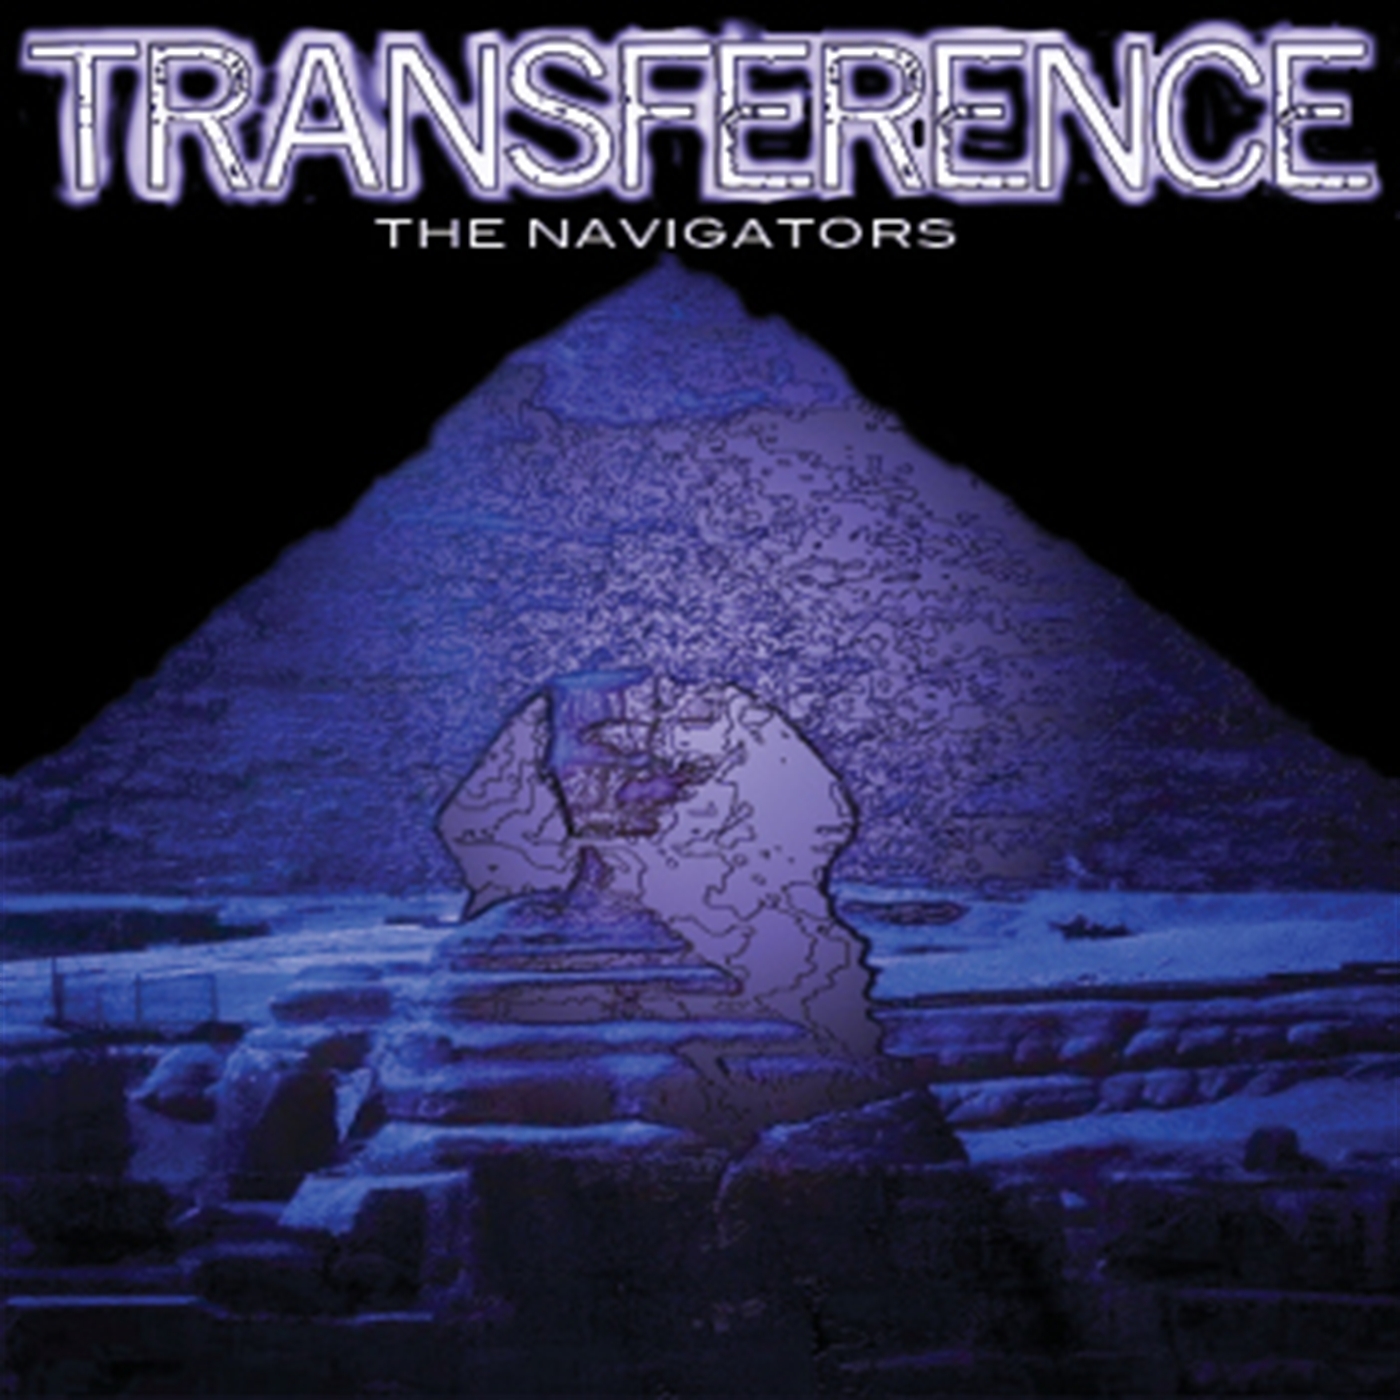  Transference – The Navigators